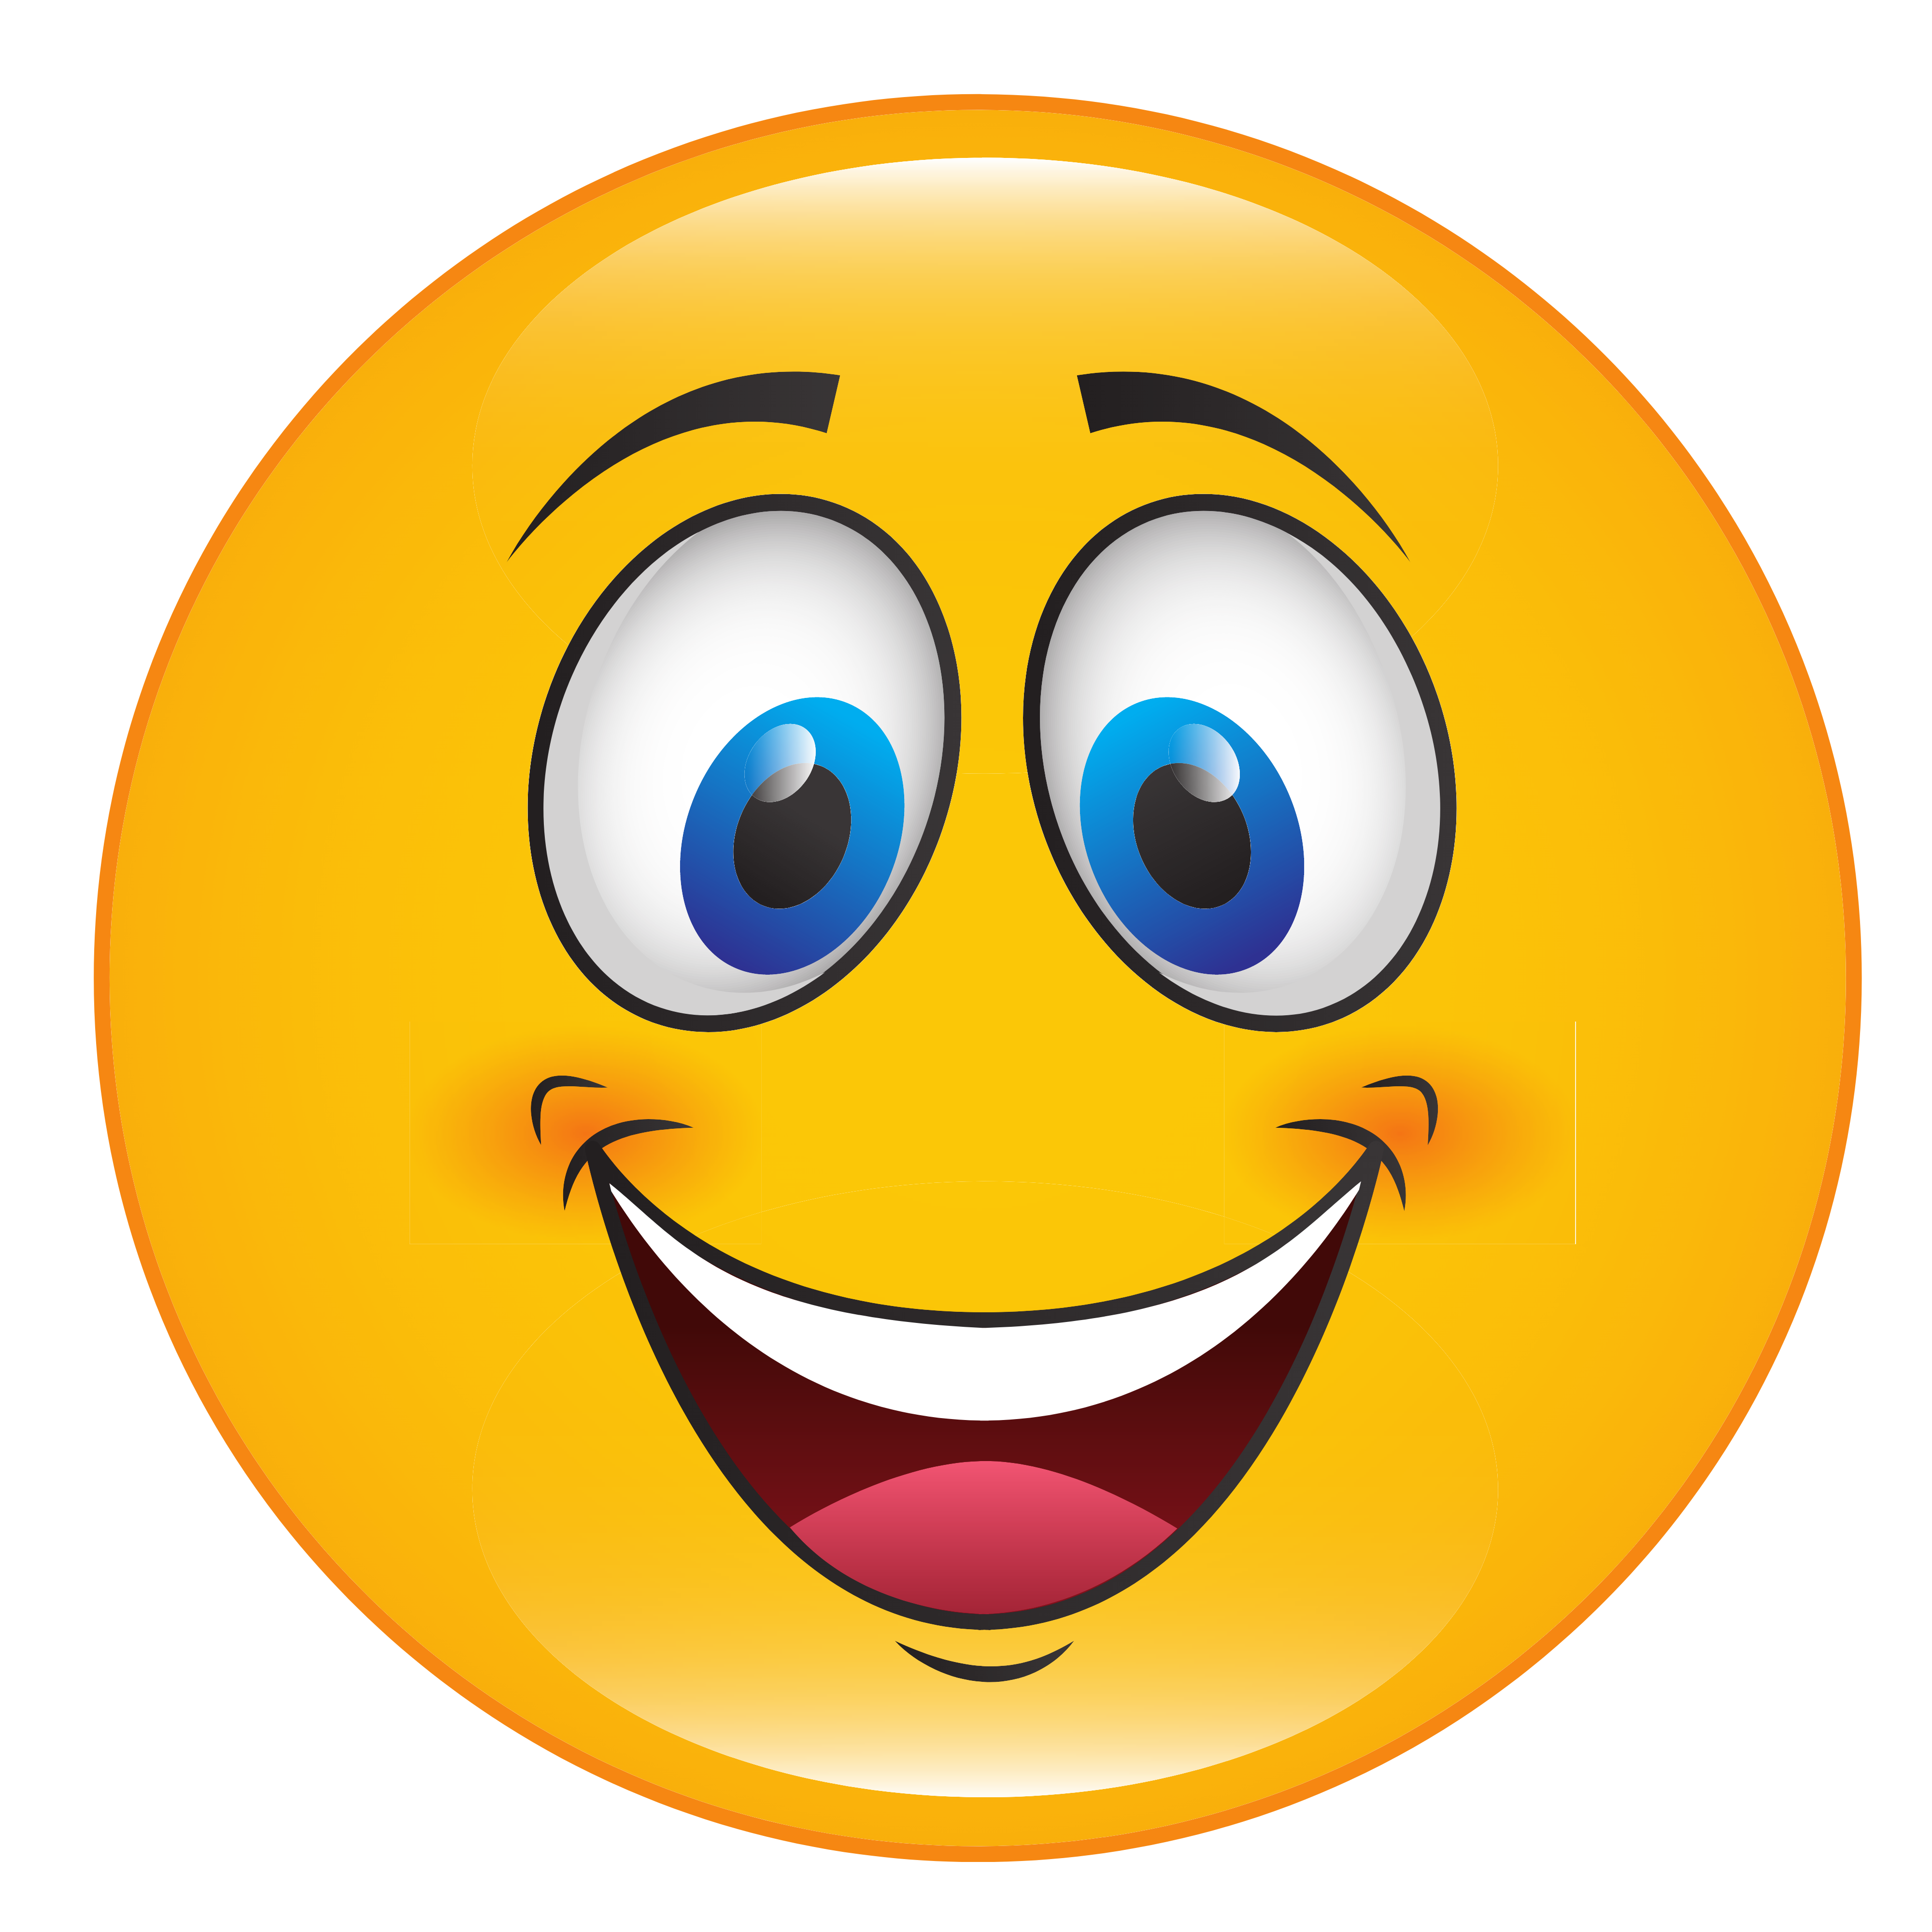 Smile Emoji, Gif, Love image Non Copyright image for $10 - SEOClerks